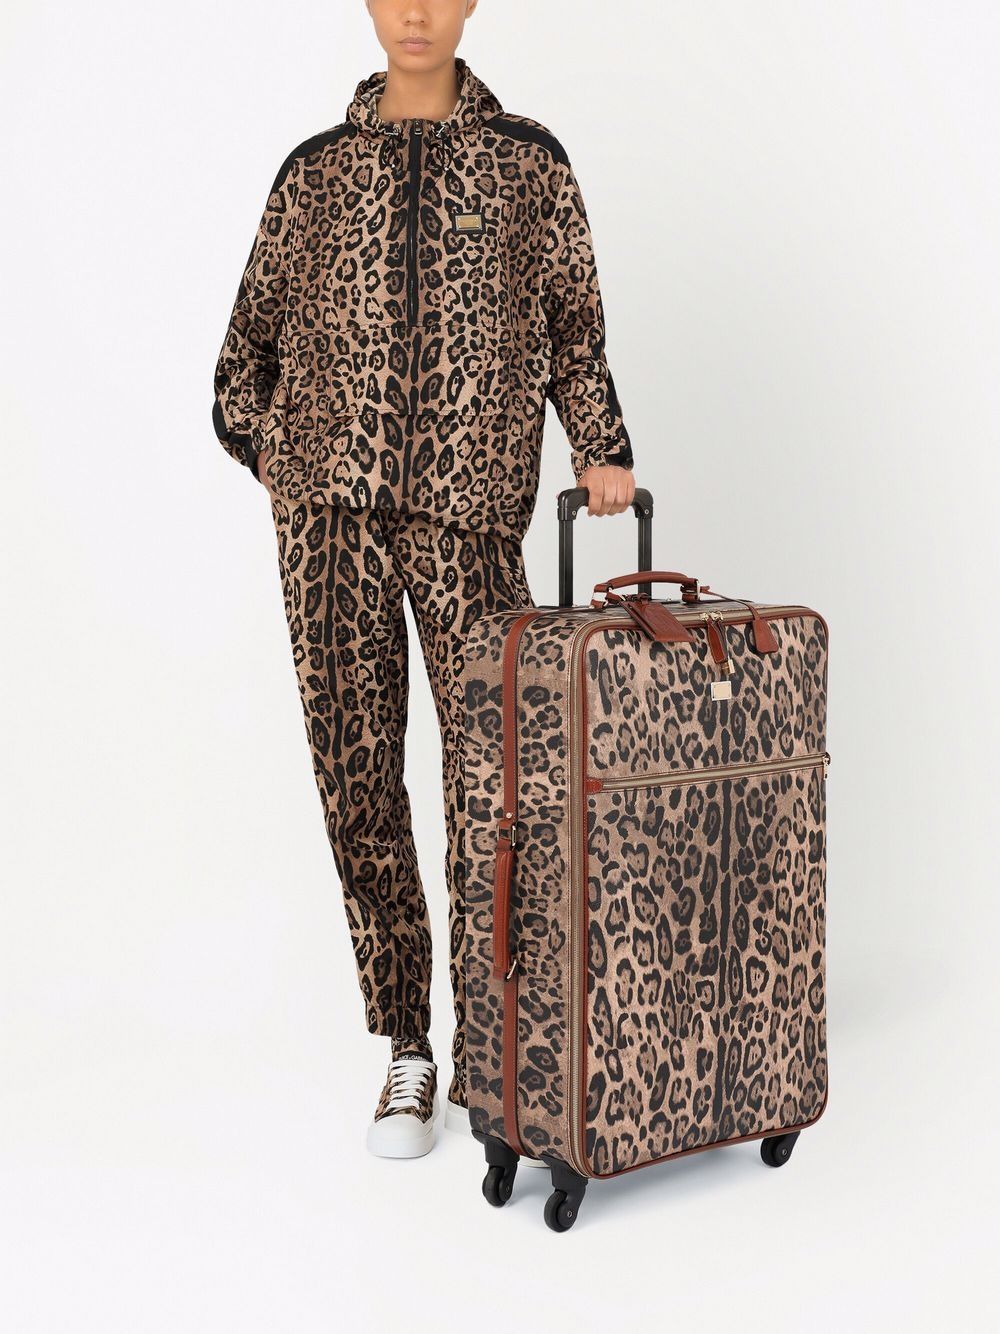 фото Dolce & gabbana чемодан с леопардовым принтом